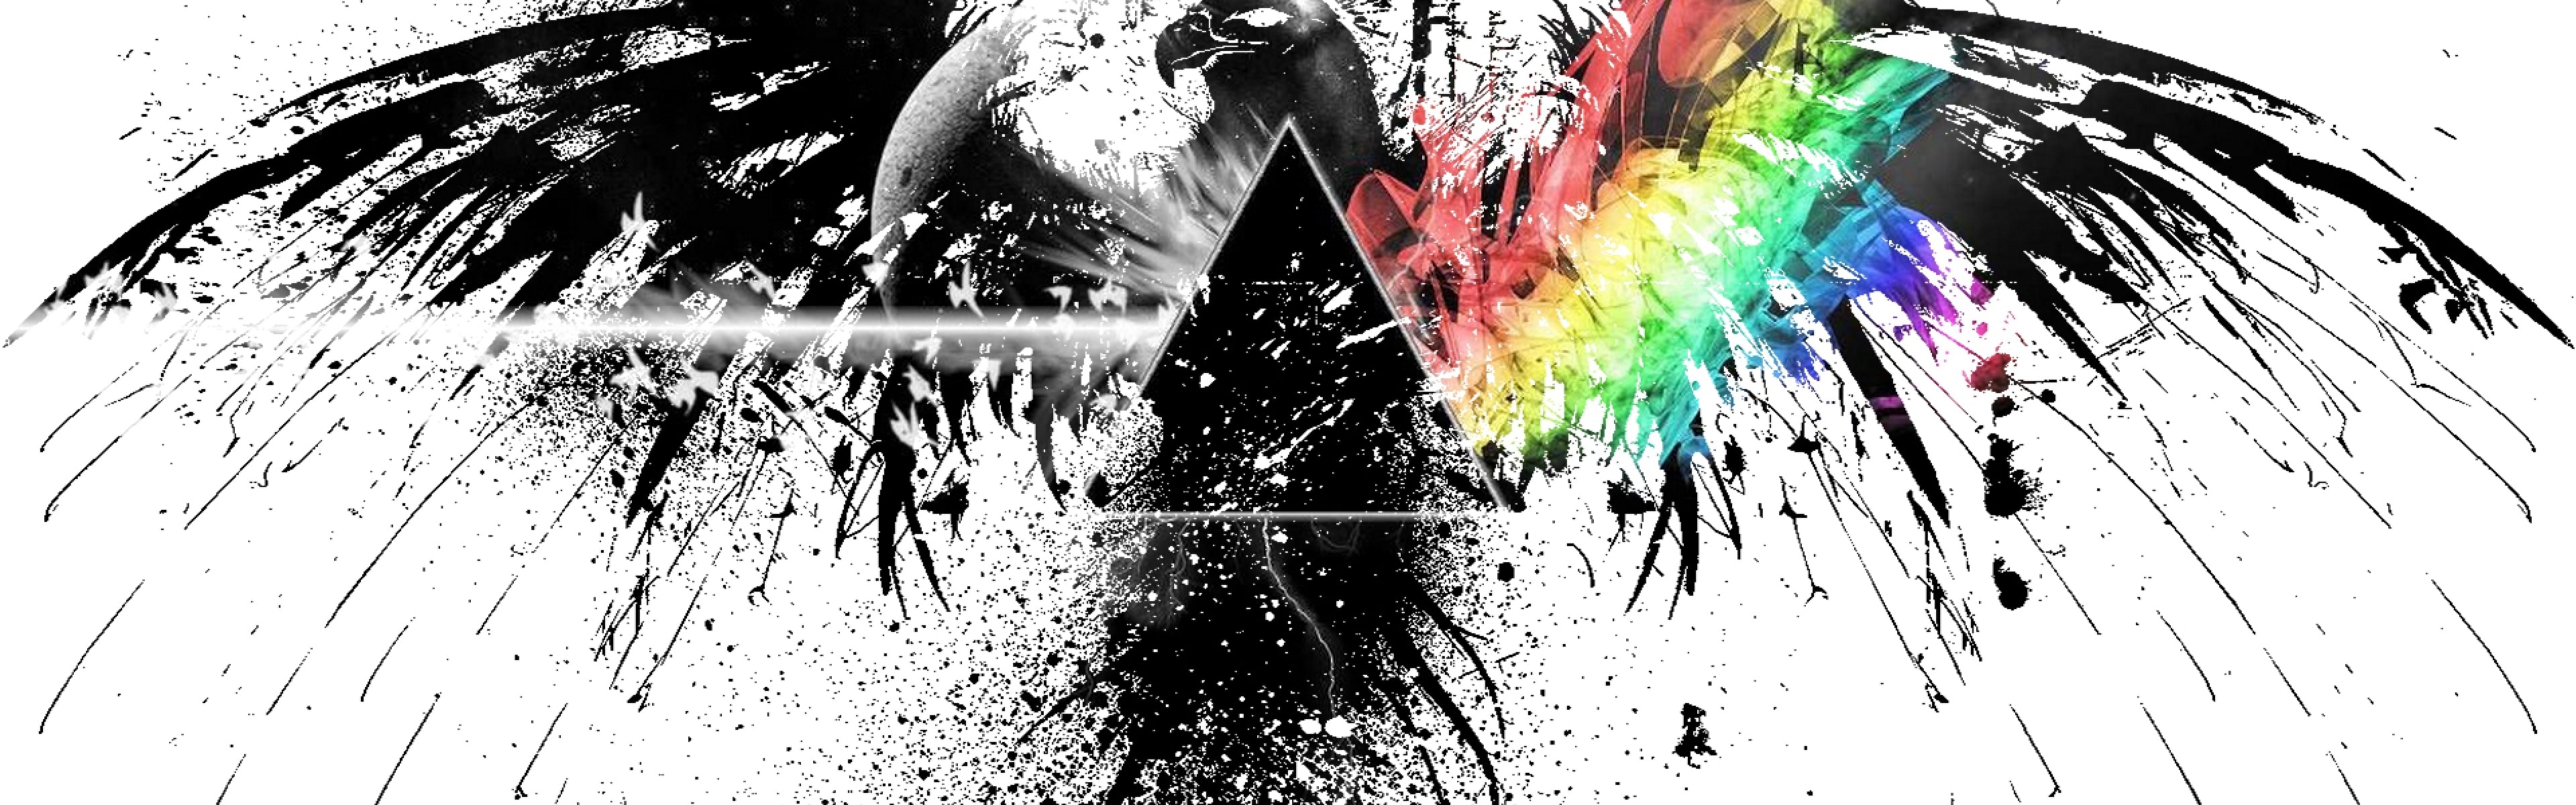 Pink Floyd HD Desktop Wallpapers 7wallpapersnet